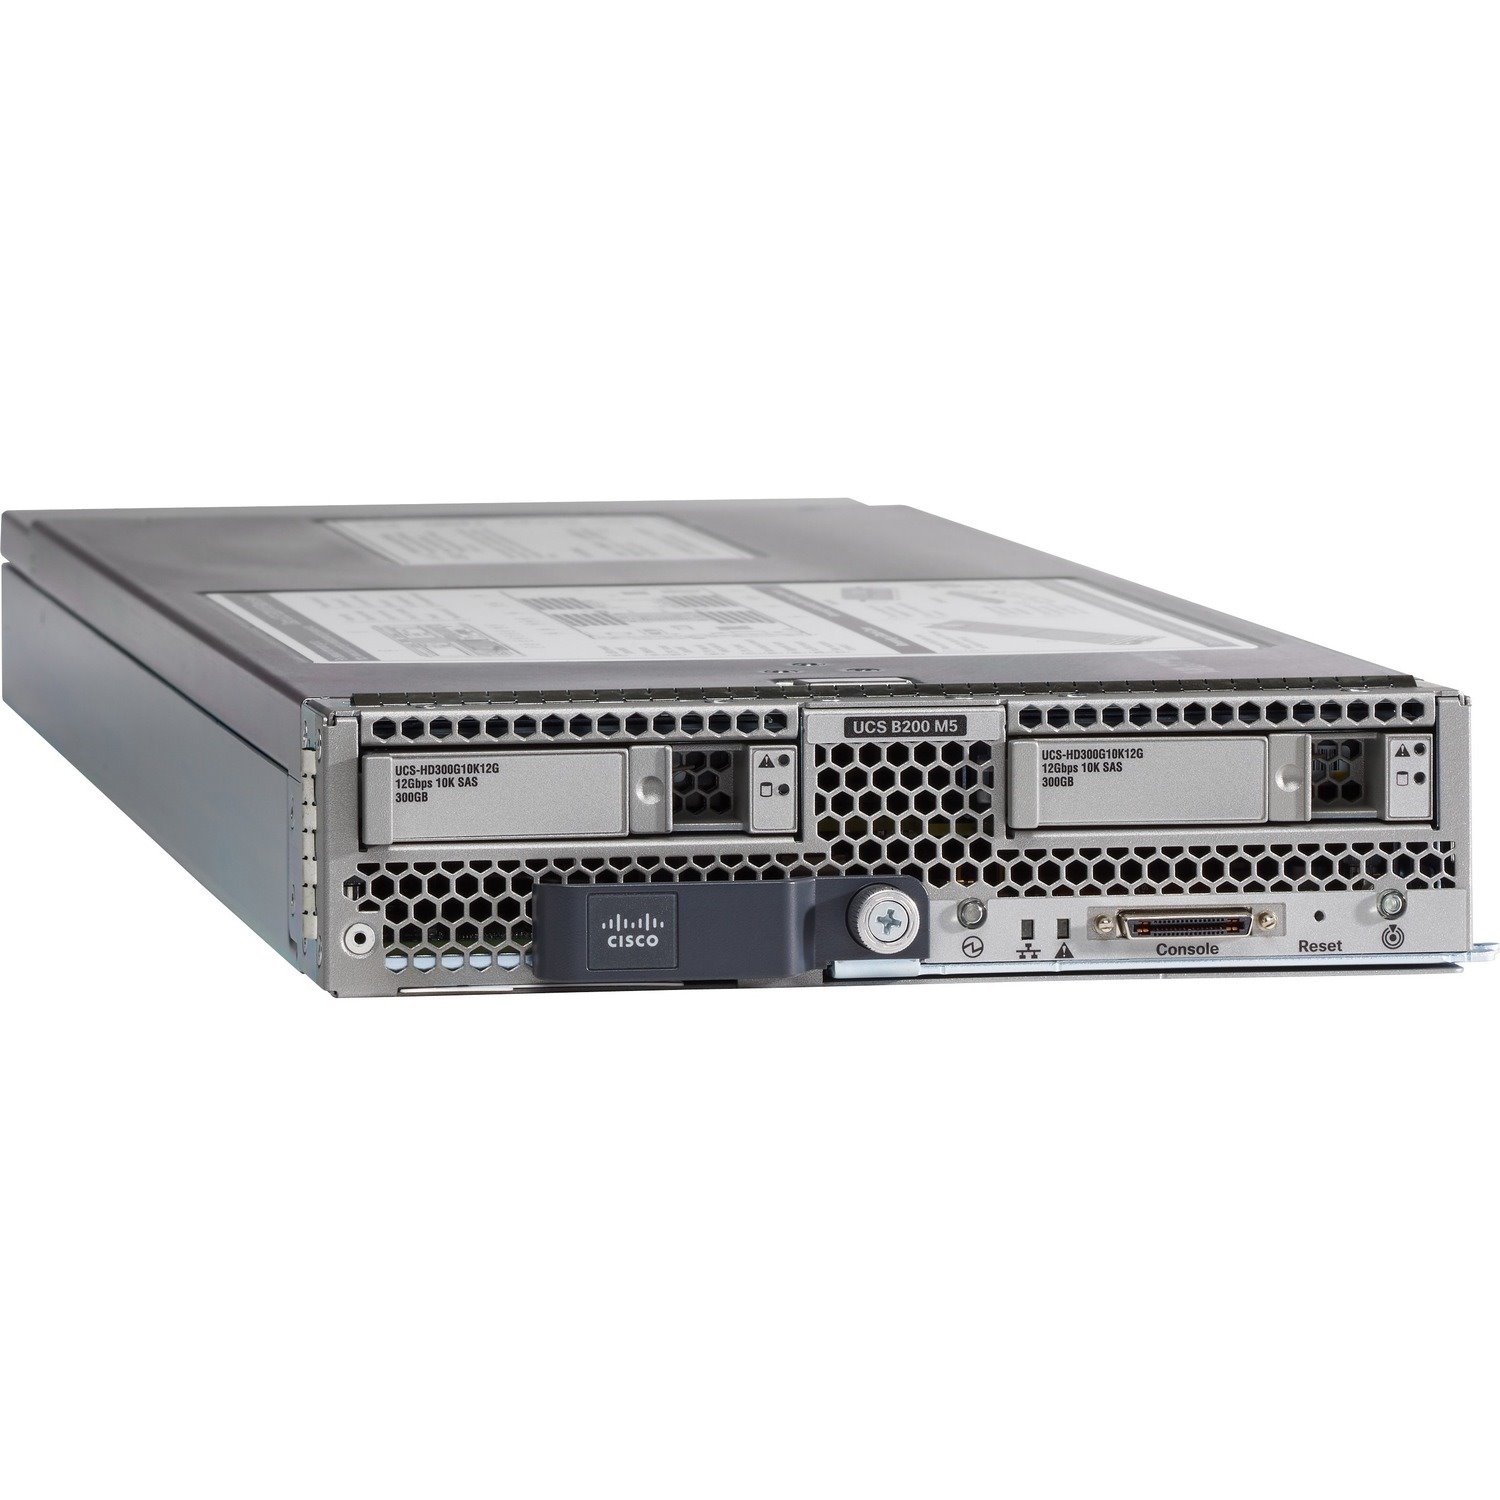 Cisco B200 M5 UCSB-B200M5-RSV1D Blade Server - 2 x Intel Xeon 6254 3.10 GHz - 64 GB RAM - 240 GB SSD - (1 x 240GB) SSD Configuration - 12Gb/s SAS Controller